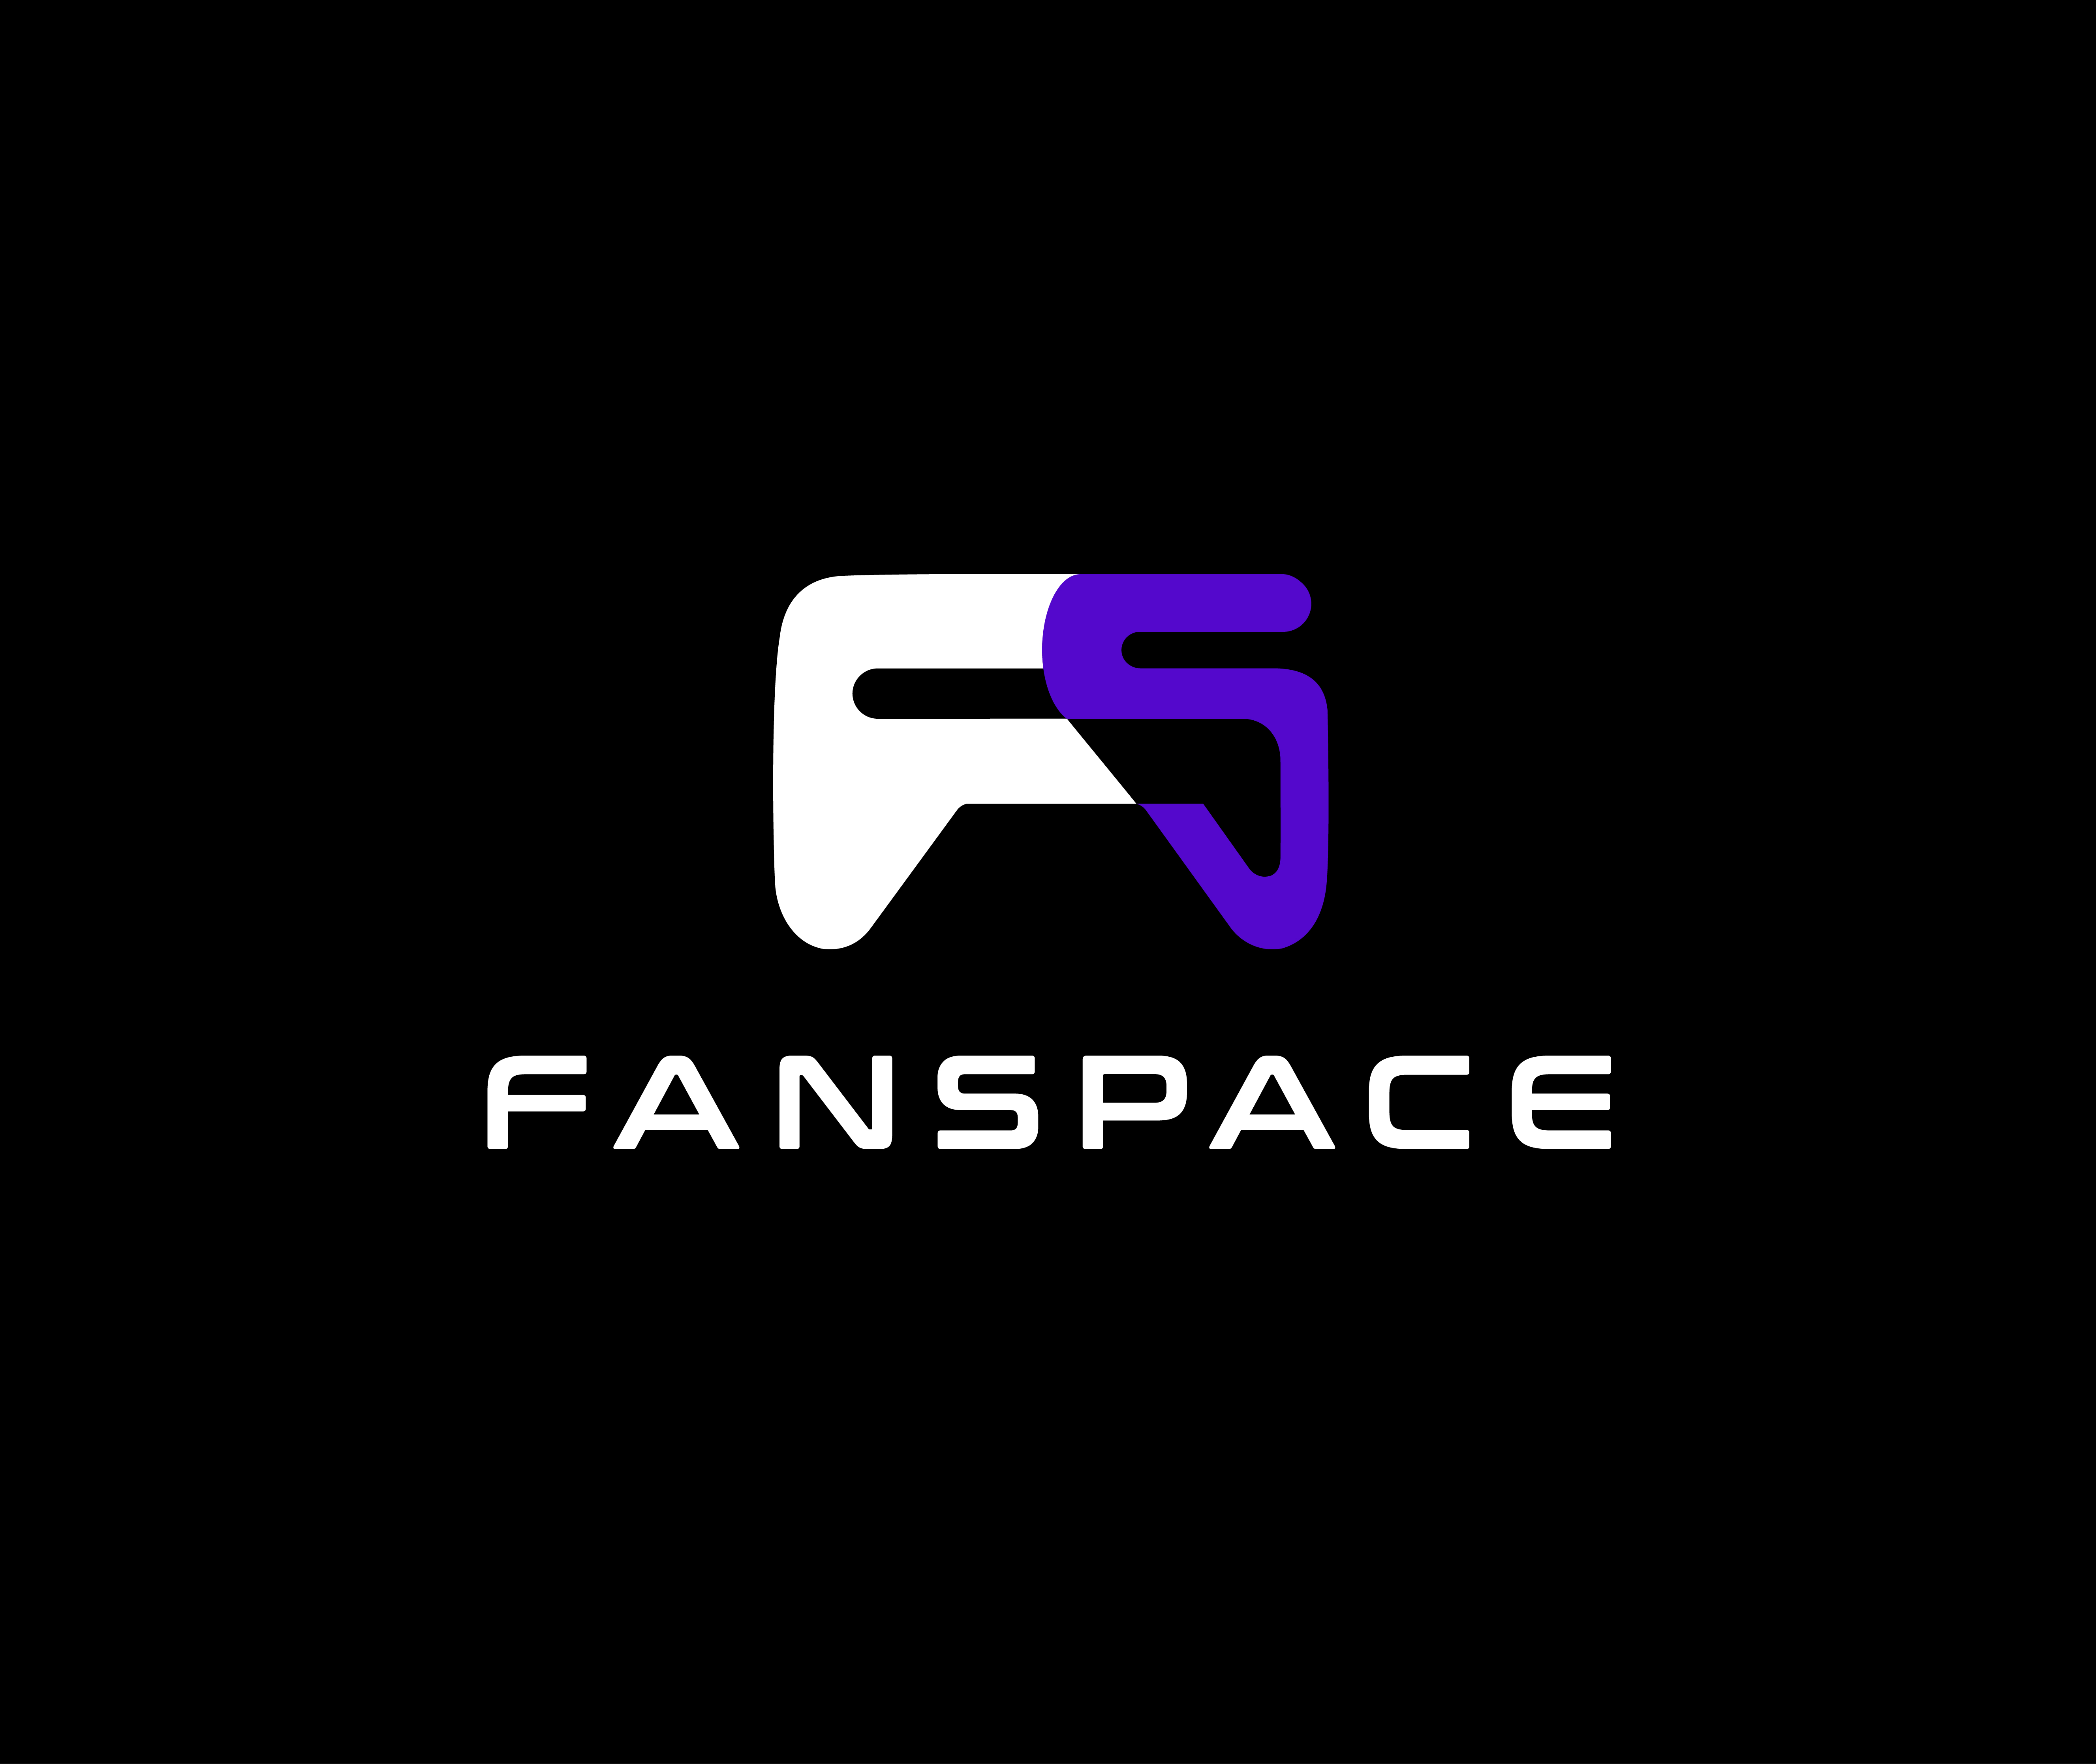 FanSpace Beta Launch: India’s premier esports fan engagement platform, FanSpace is set for beta launch on August 15